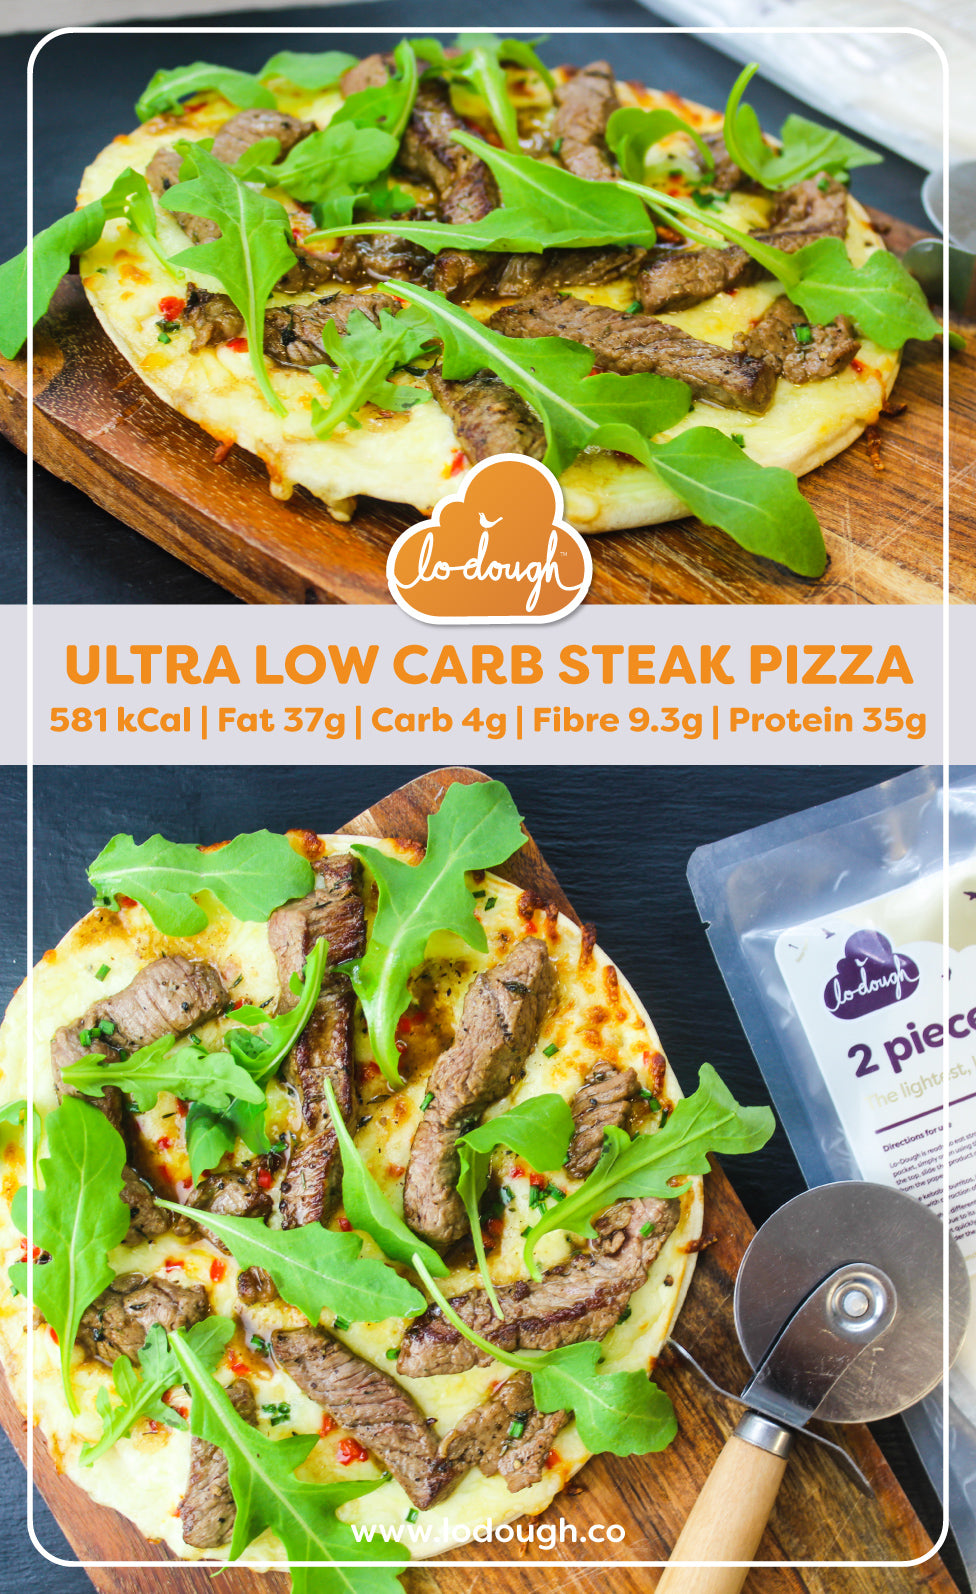 Ultra low carb steak pizza